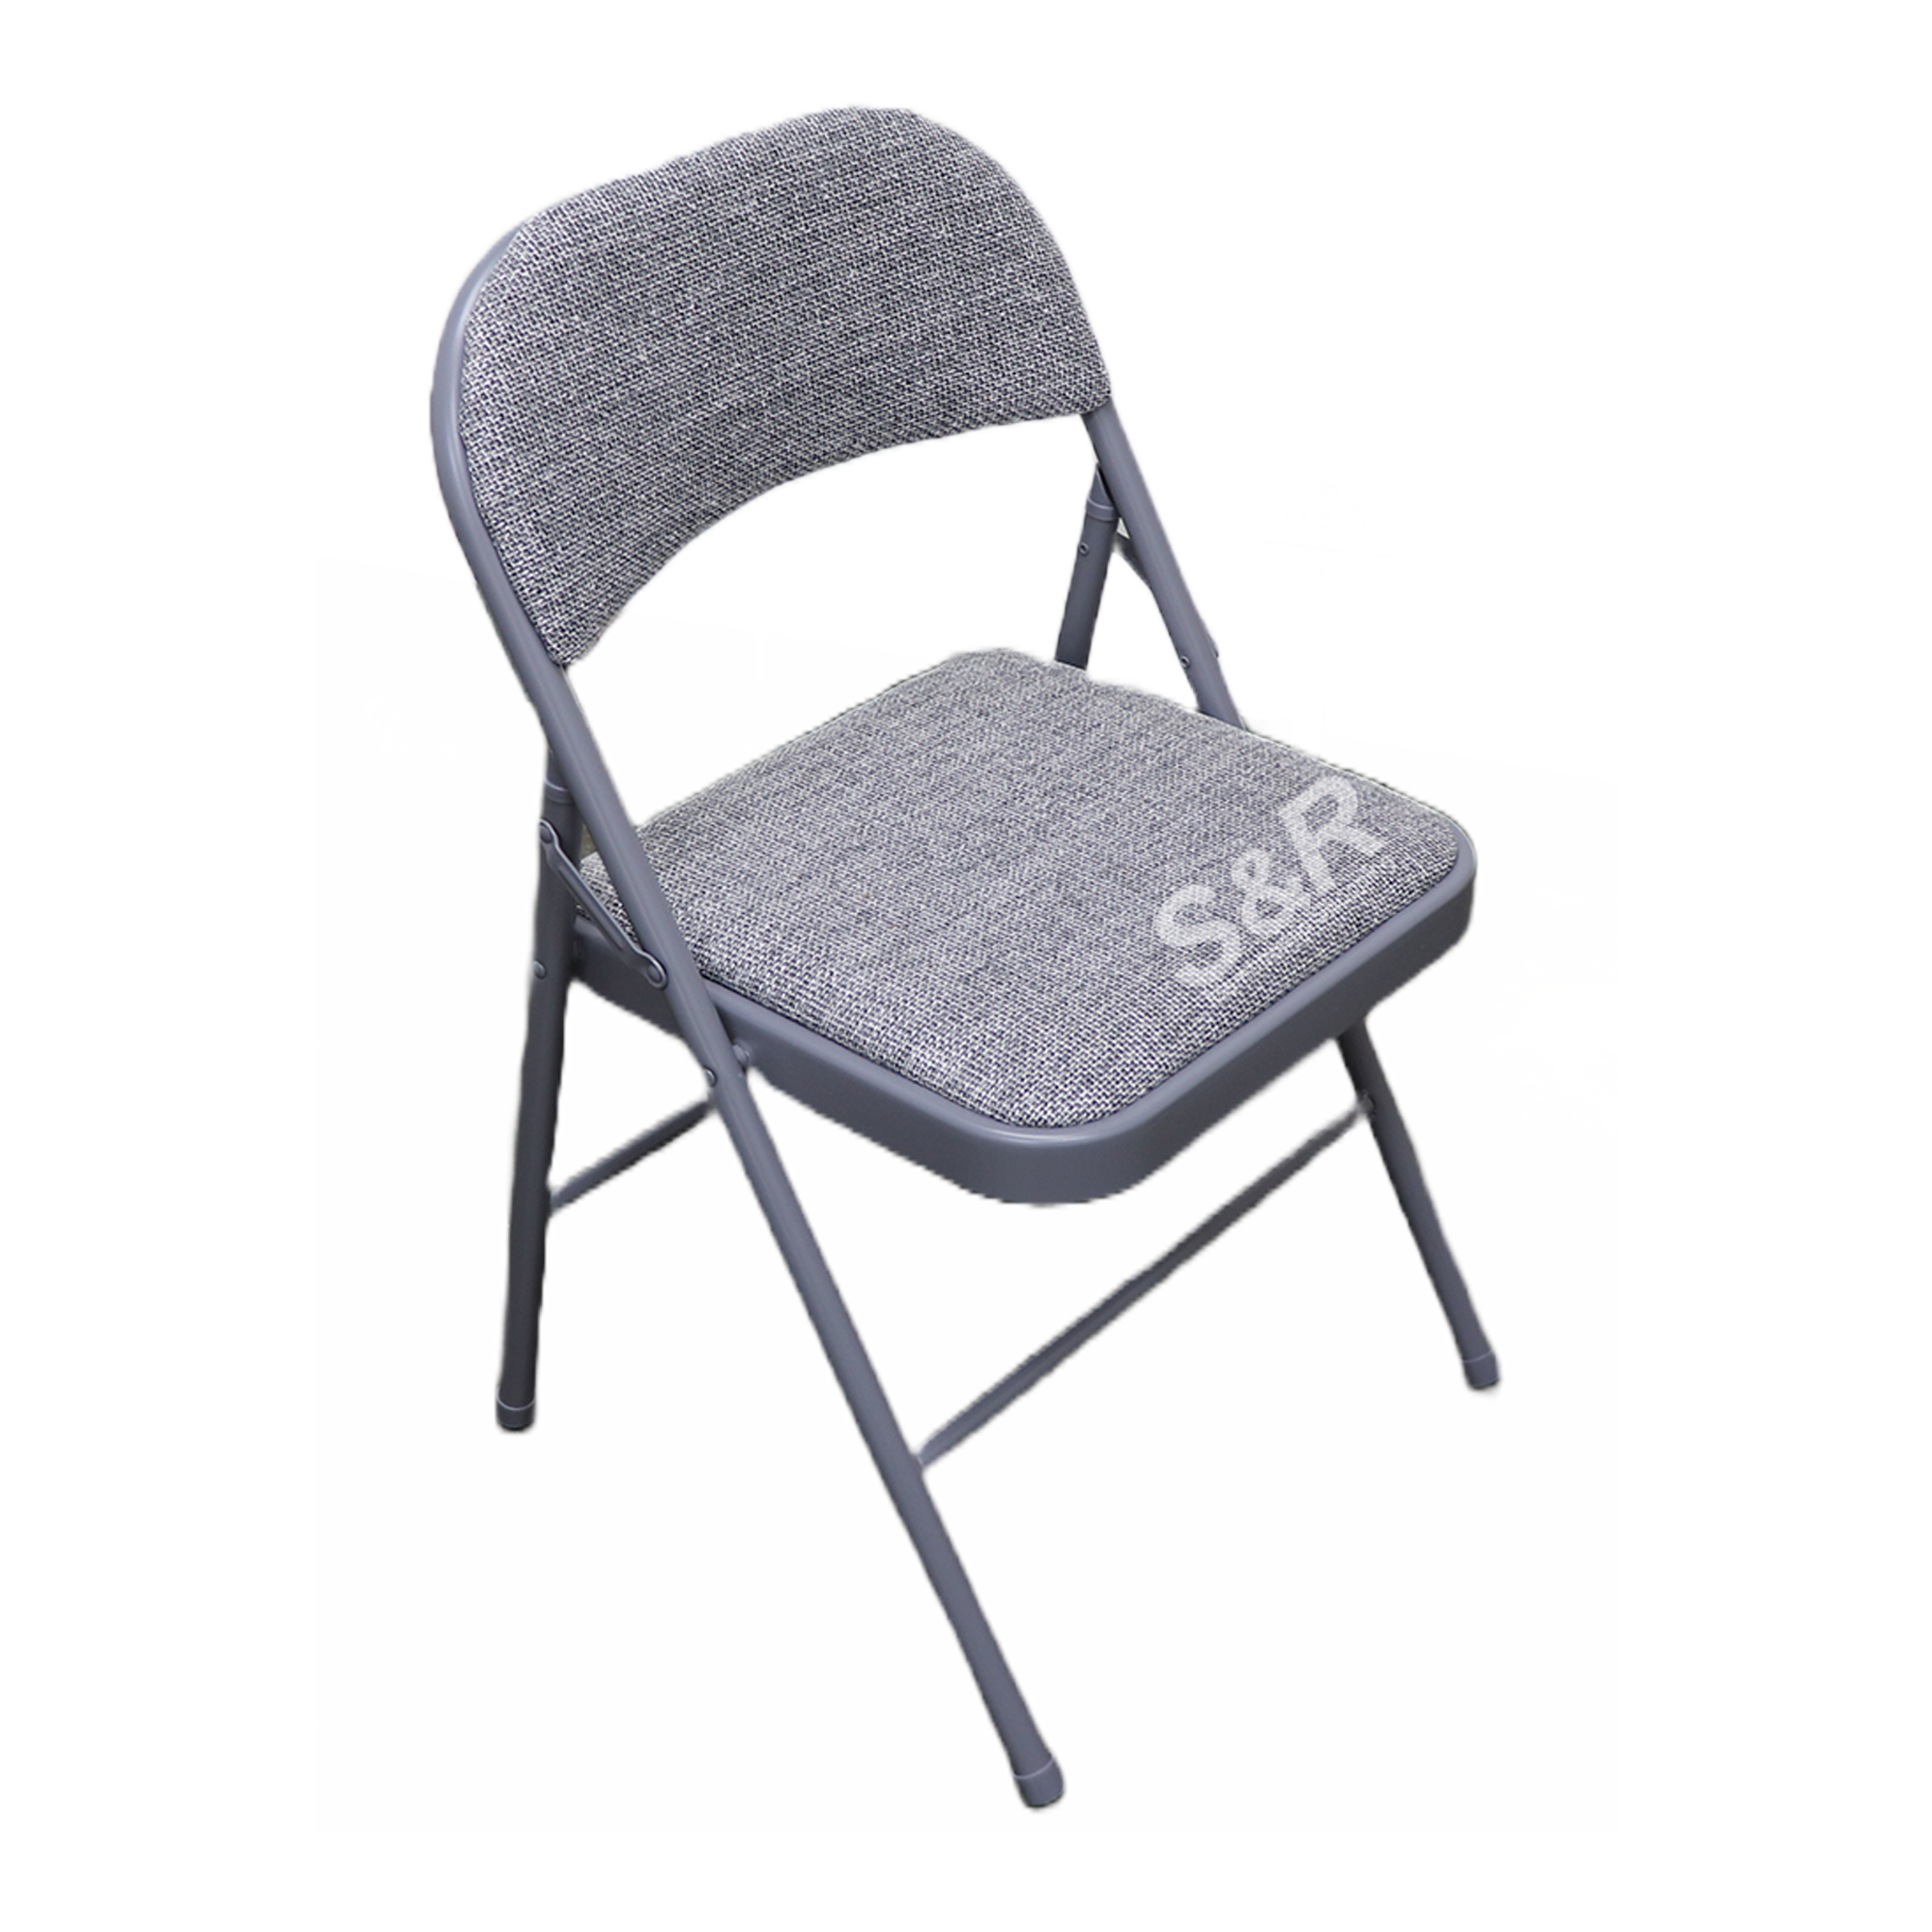 Cosco Folding Chair Grey Fabric 1pc